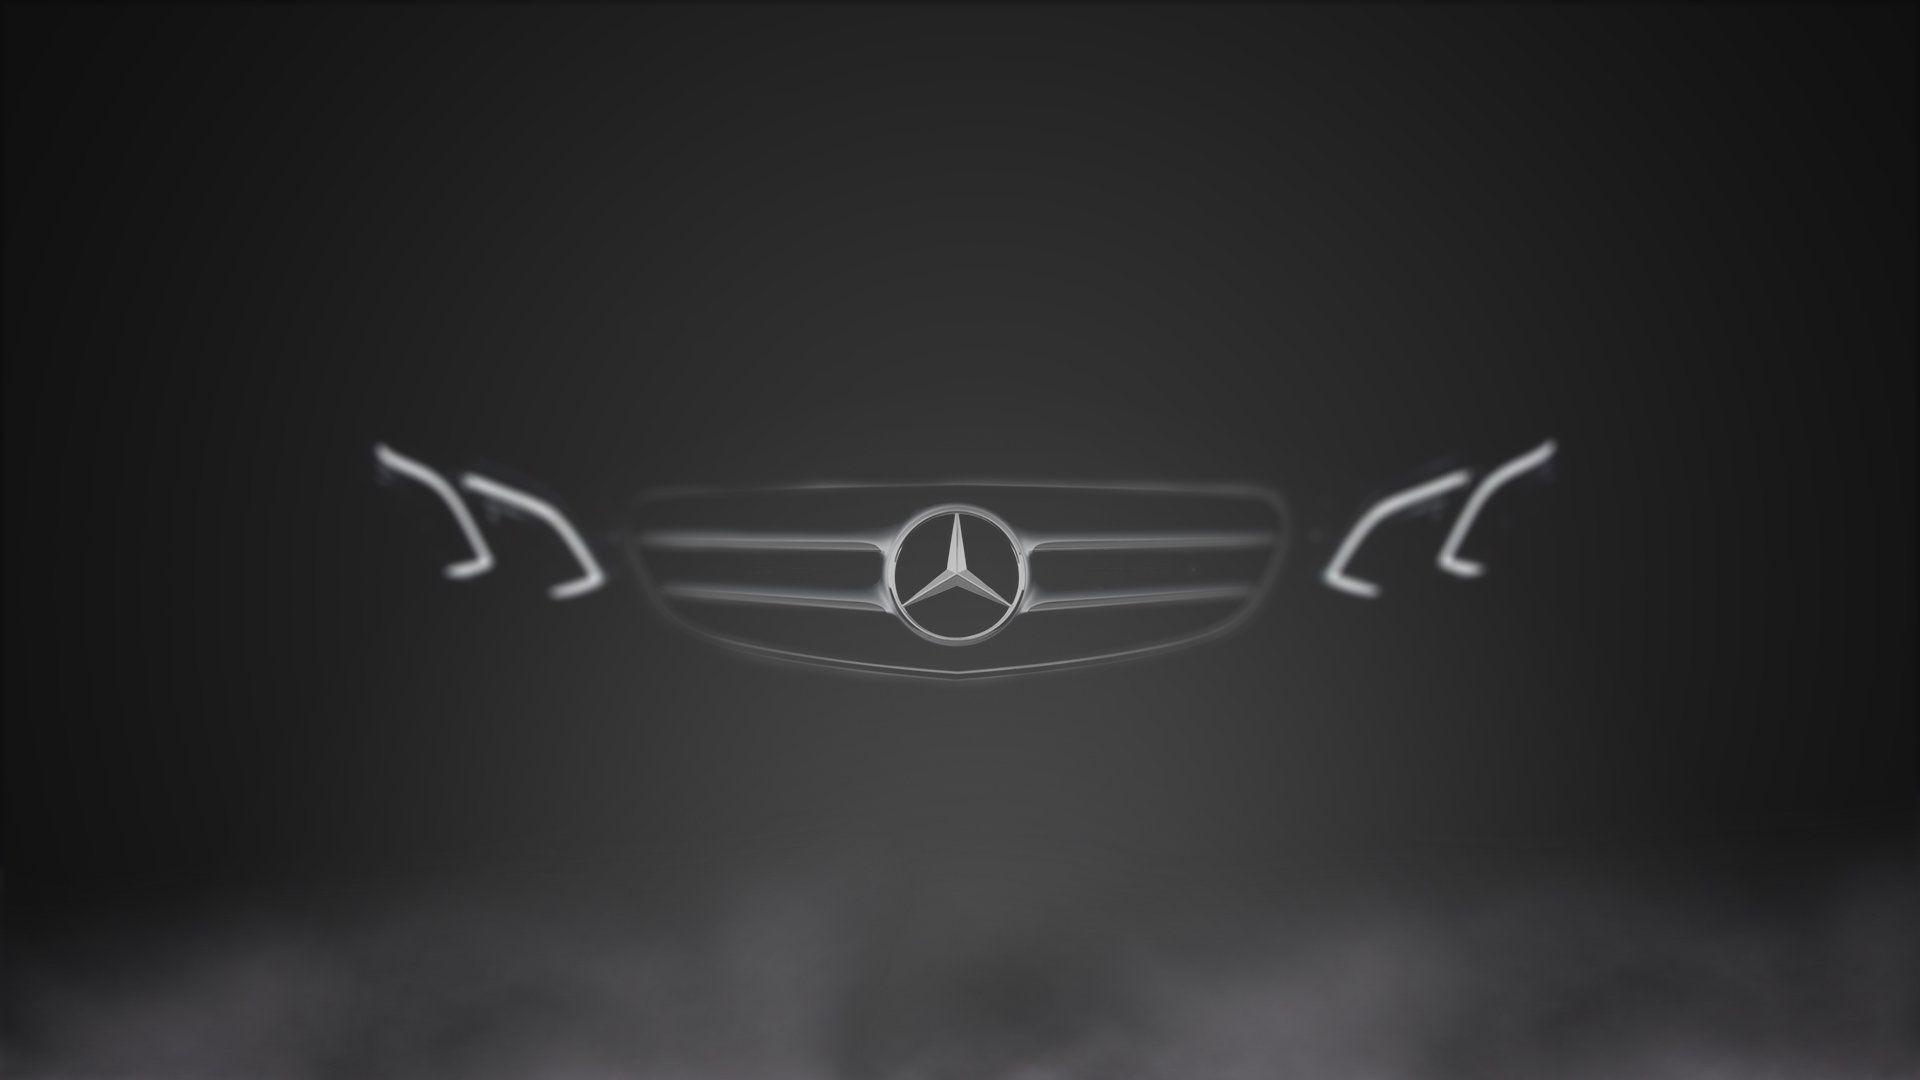 ArtStation - BMW vs Mercedes Benz